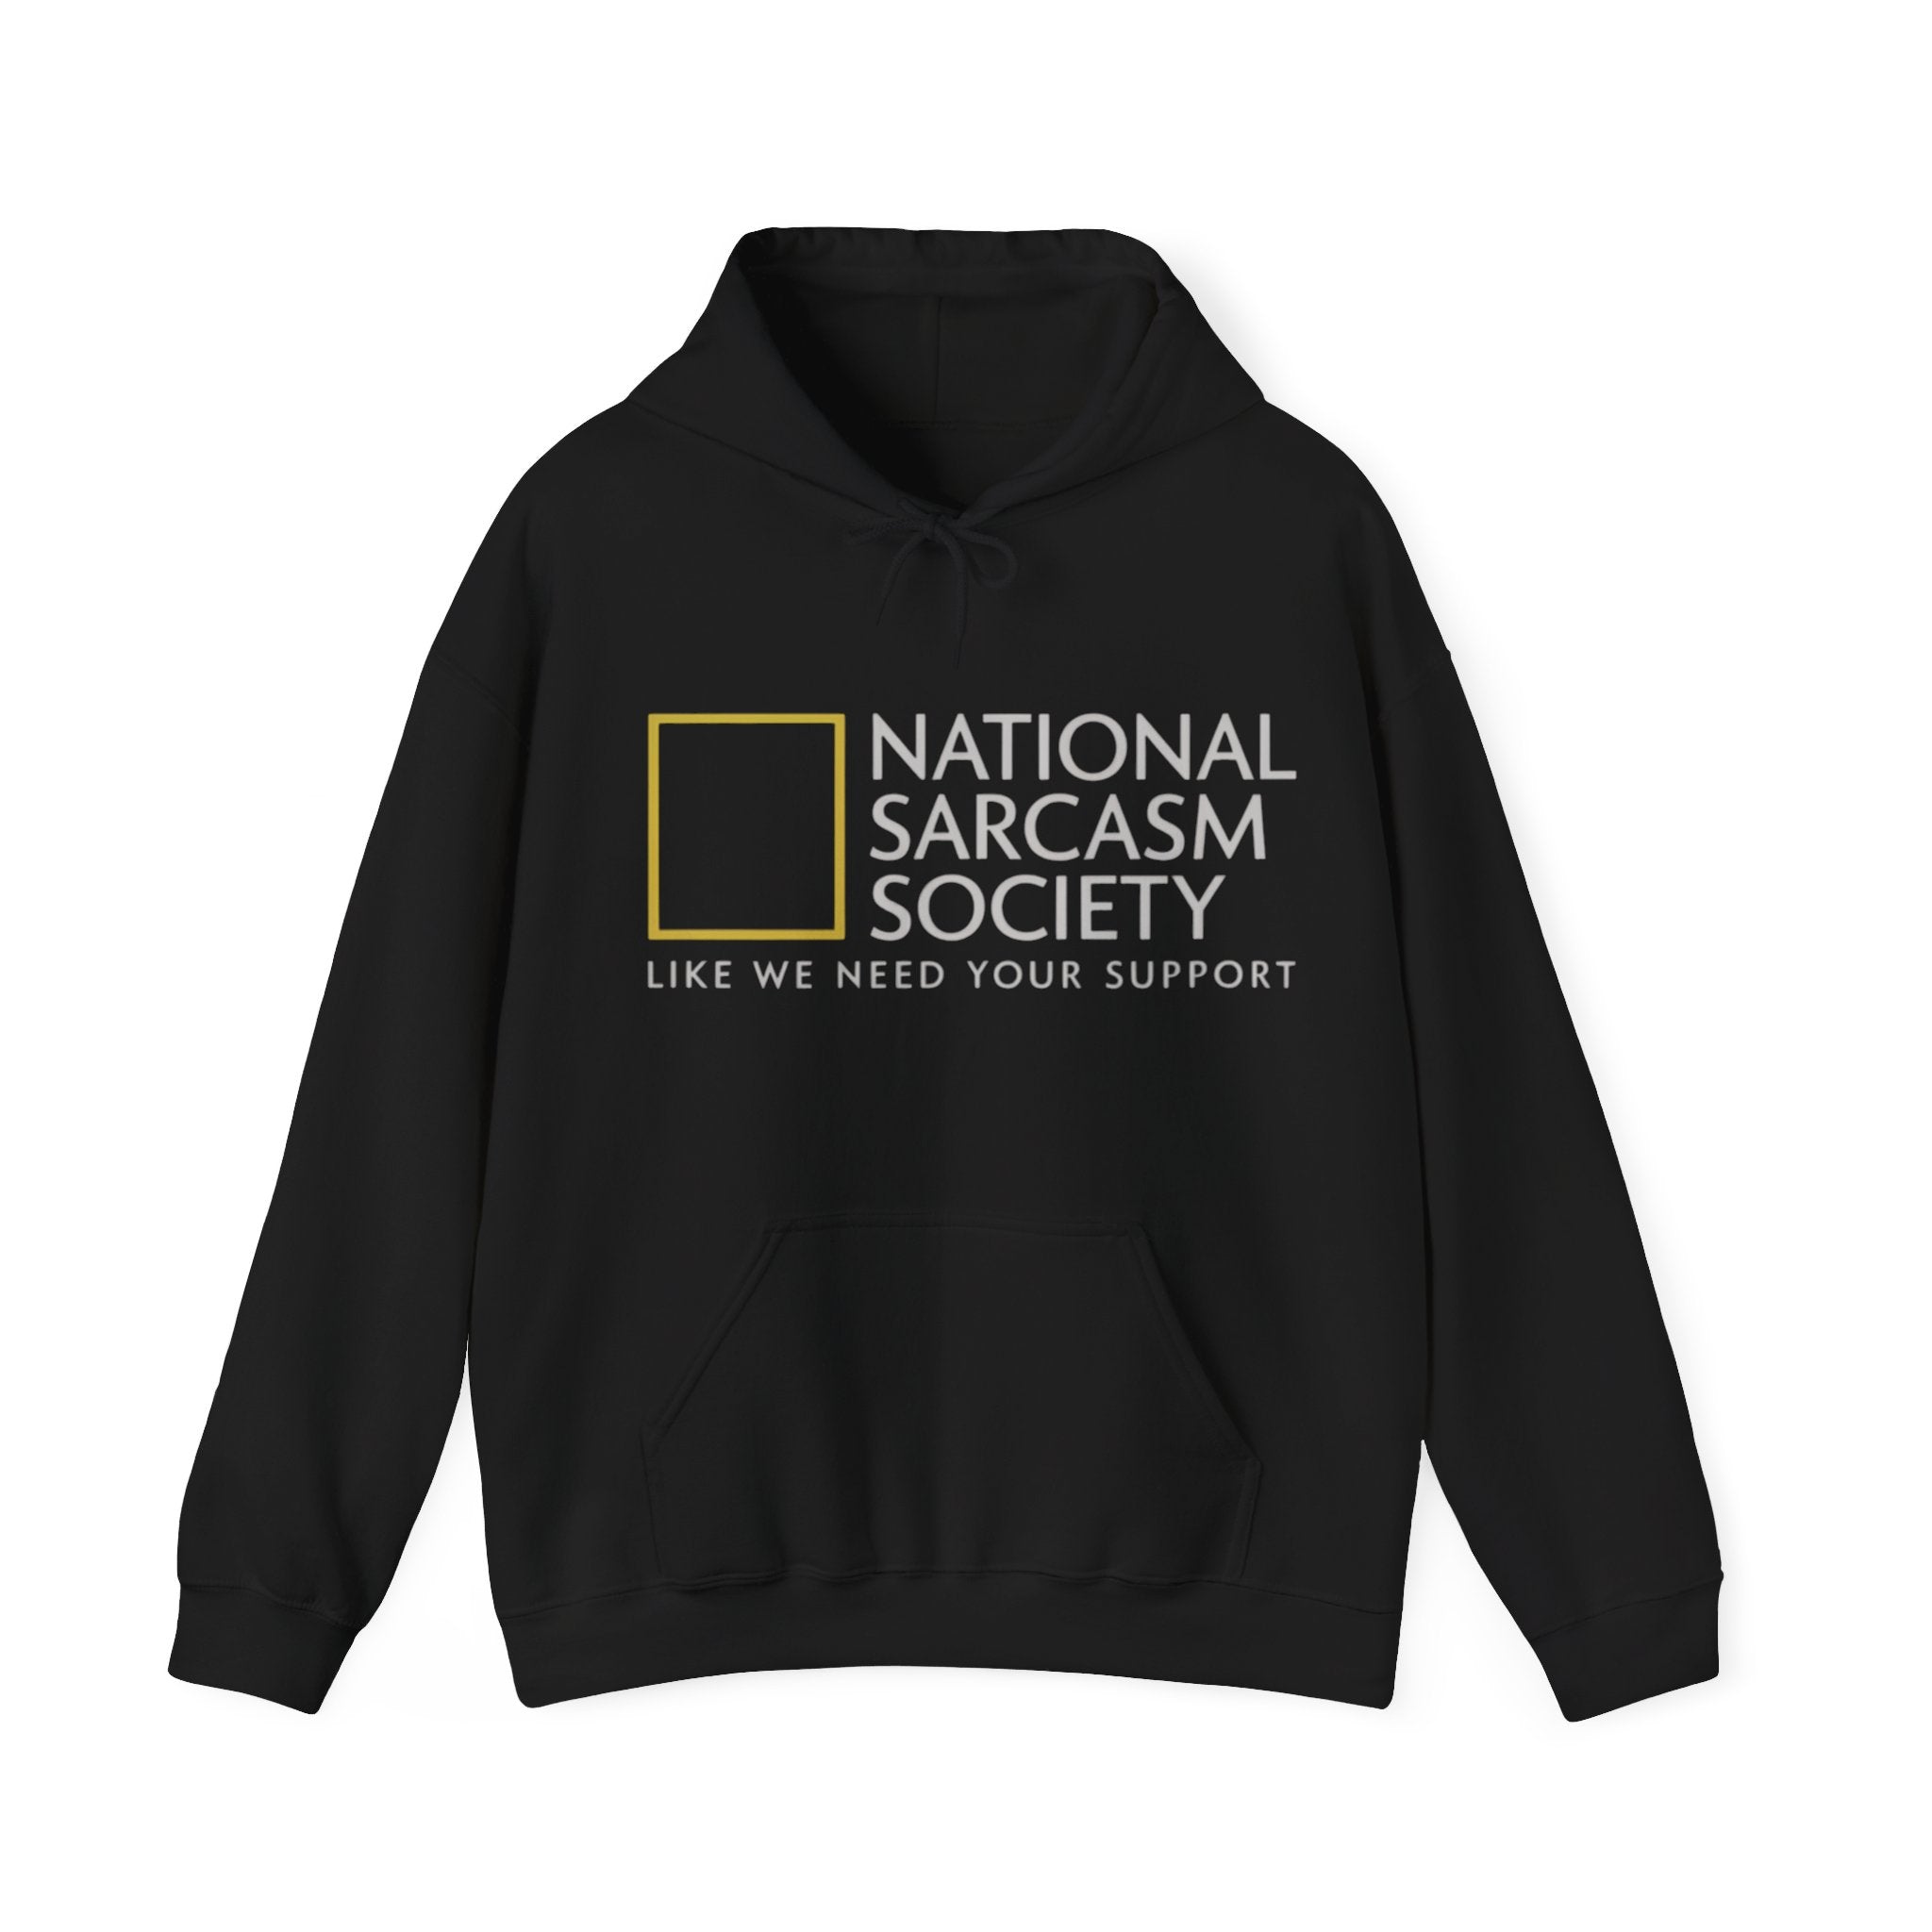 National Sarcasm Society - Hooded Sweatshirt